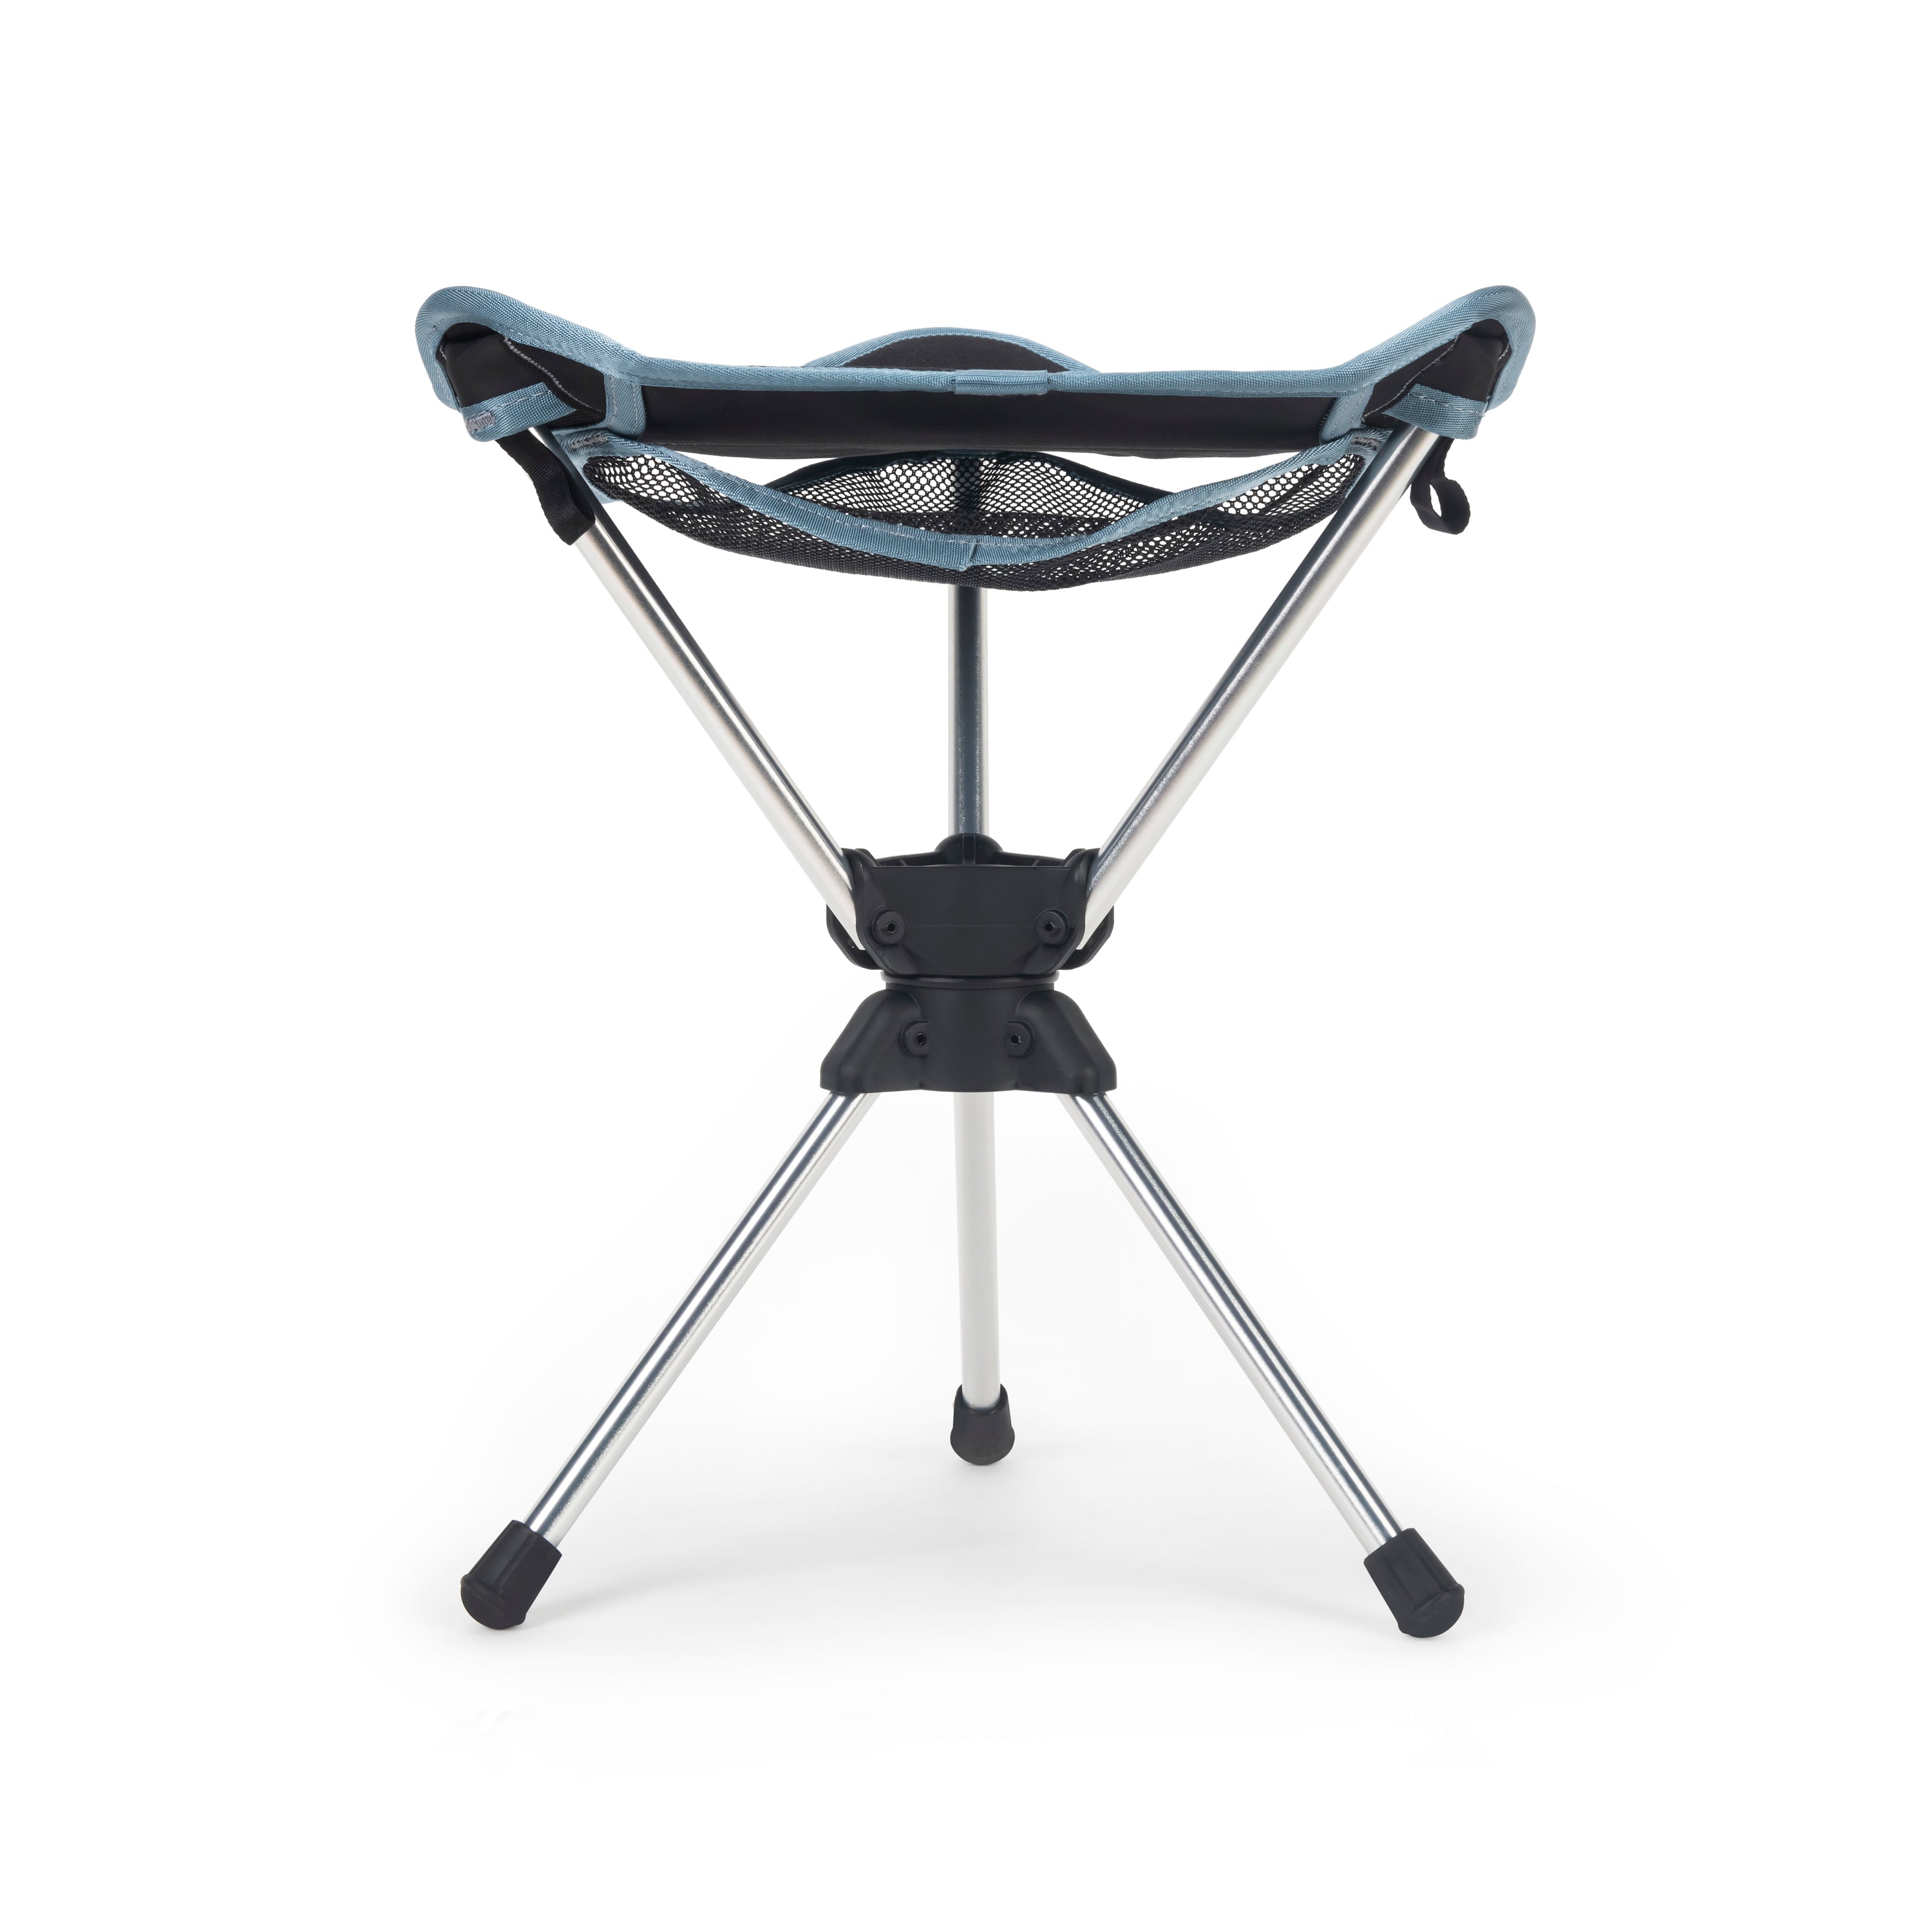 Camel outdoor equipment folding stool portable lightweight camping